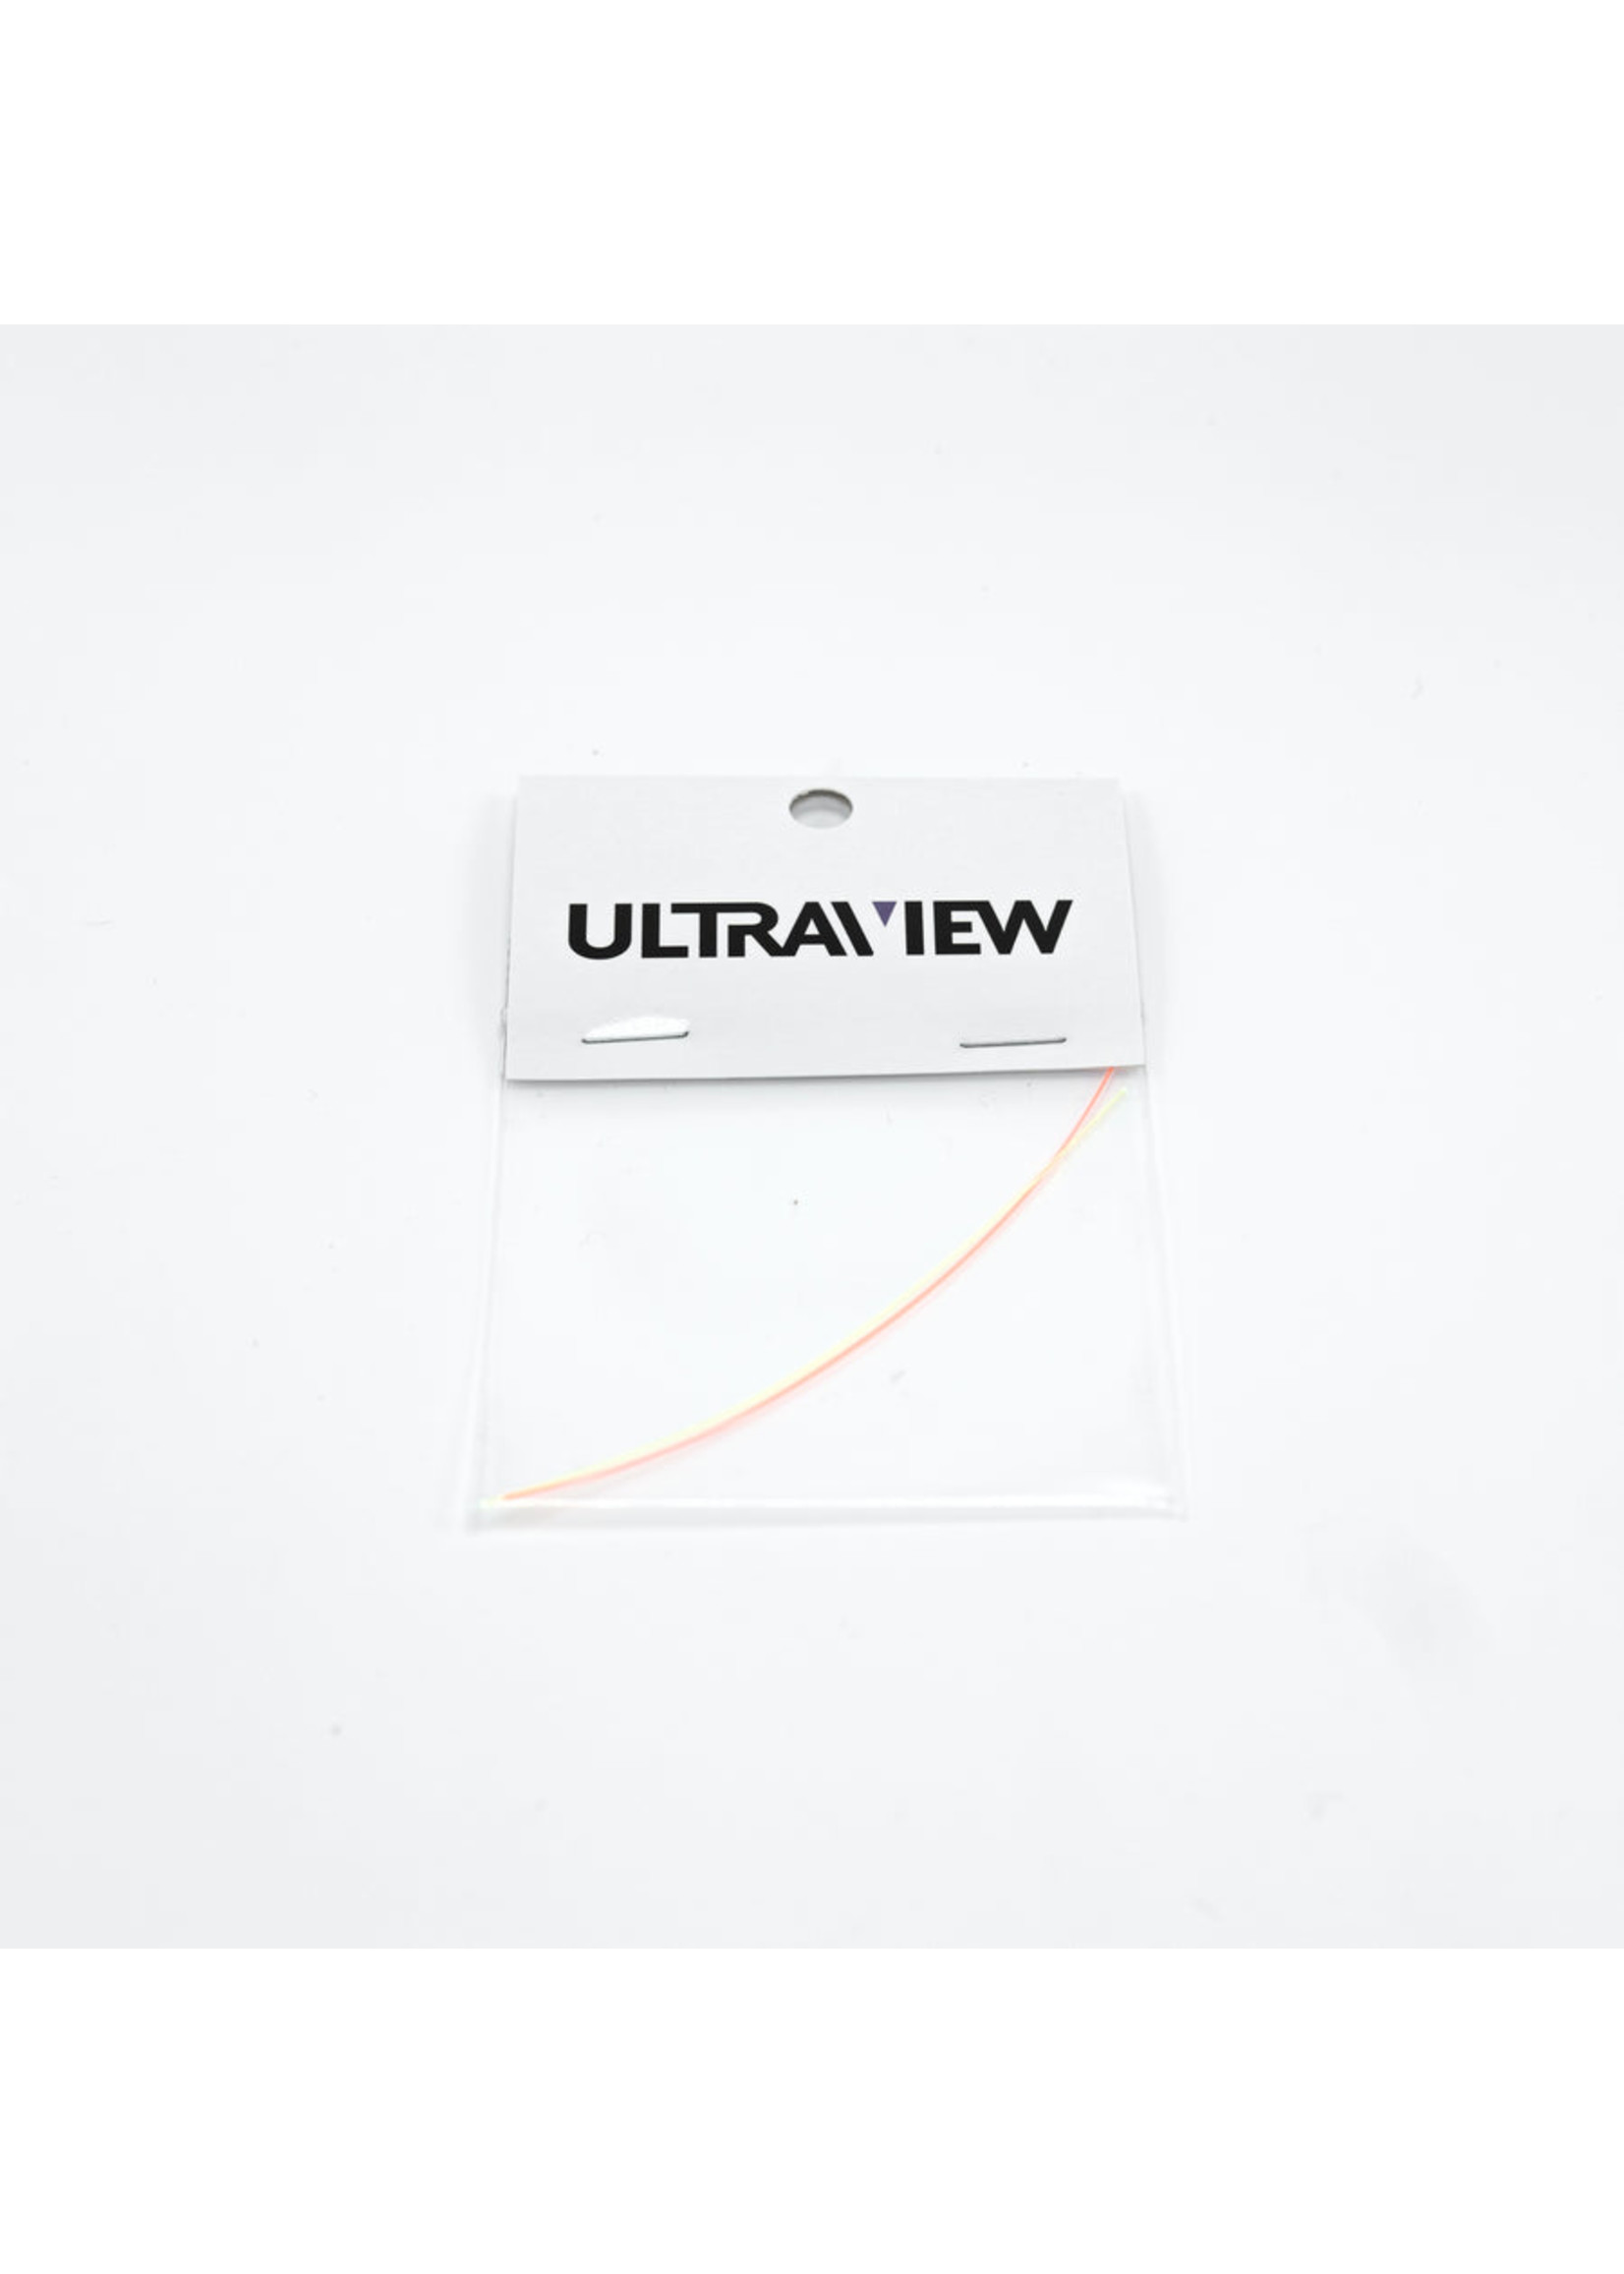 UltraView Ultraview Fiber Kit